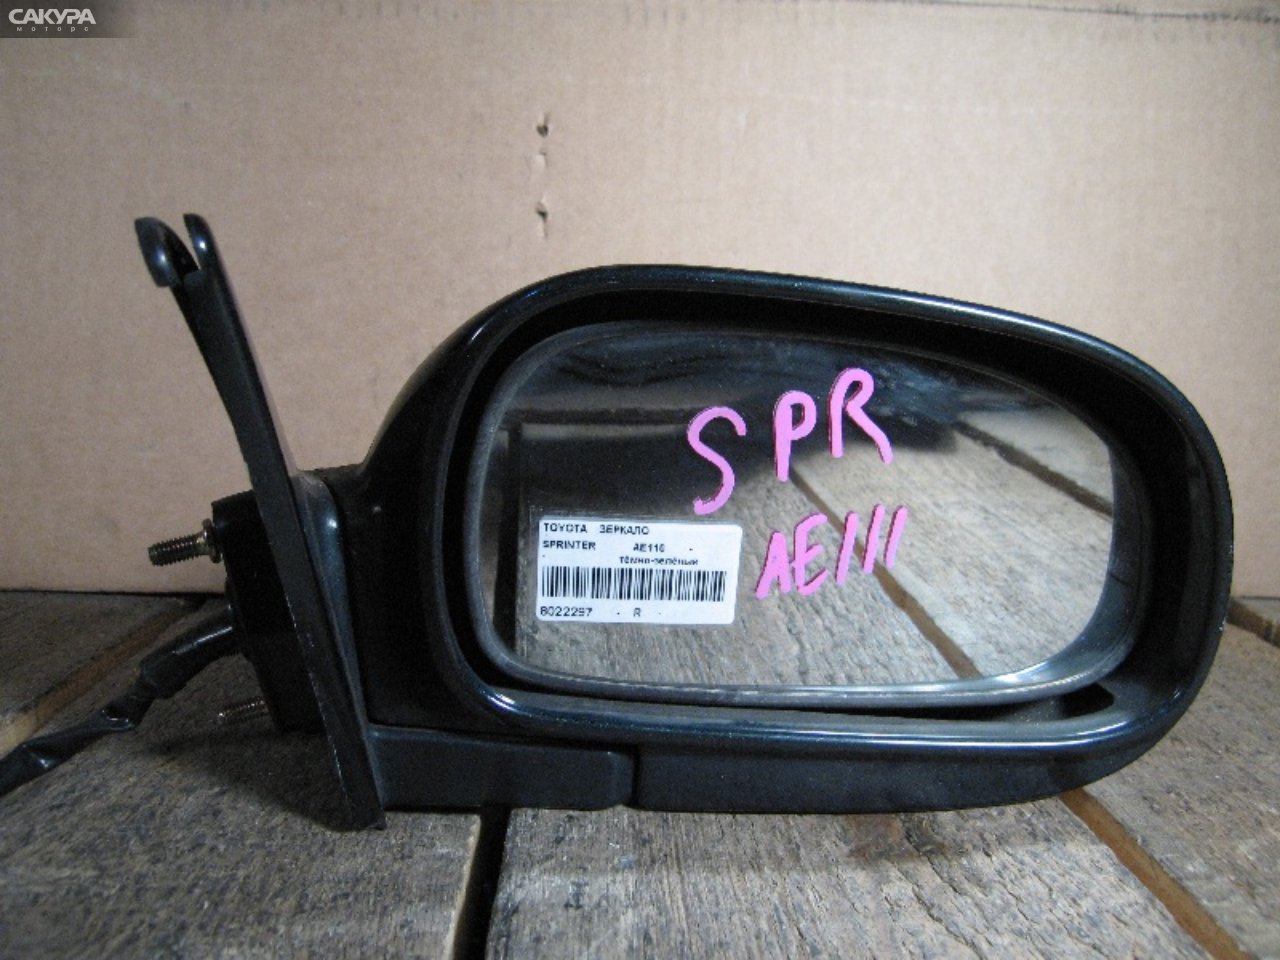 Зеркало боковое правое Toyota Sprinter AE110: купить в Сакура Абакан.